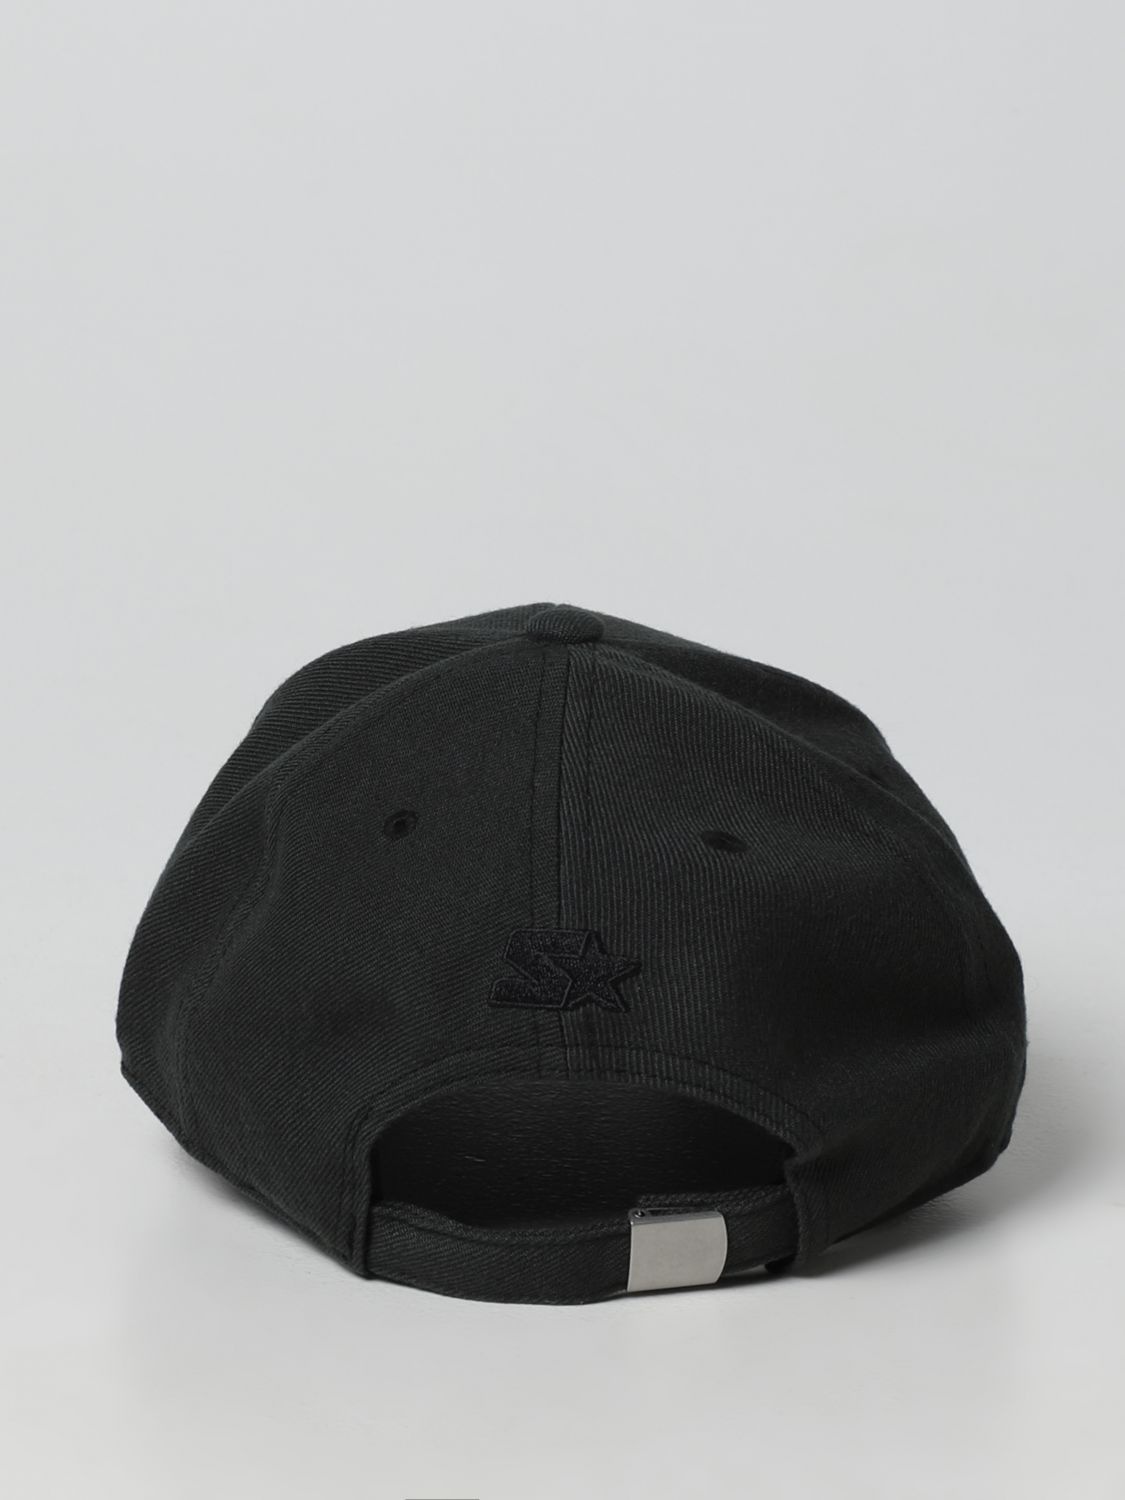 Marcelo Burlon hat for man - 3